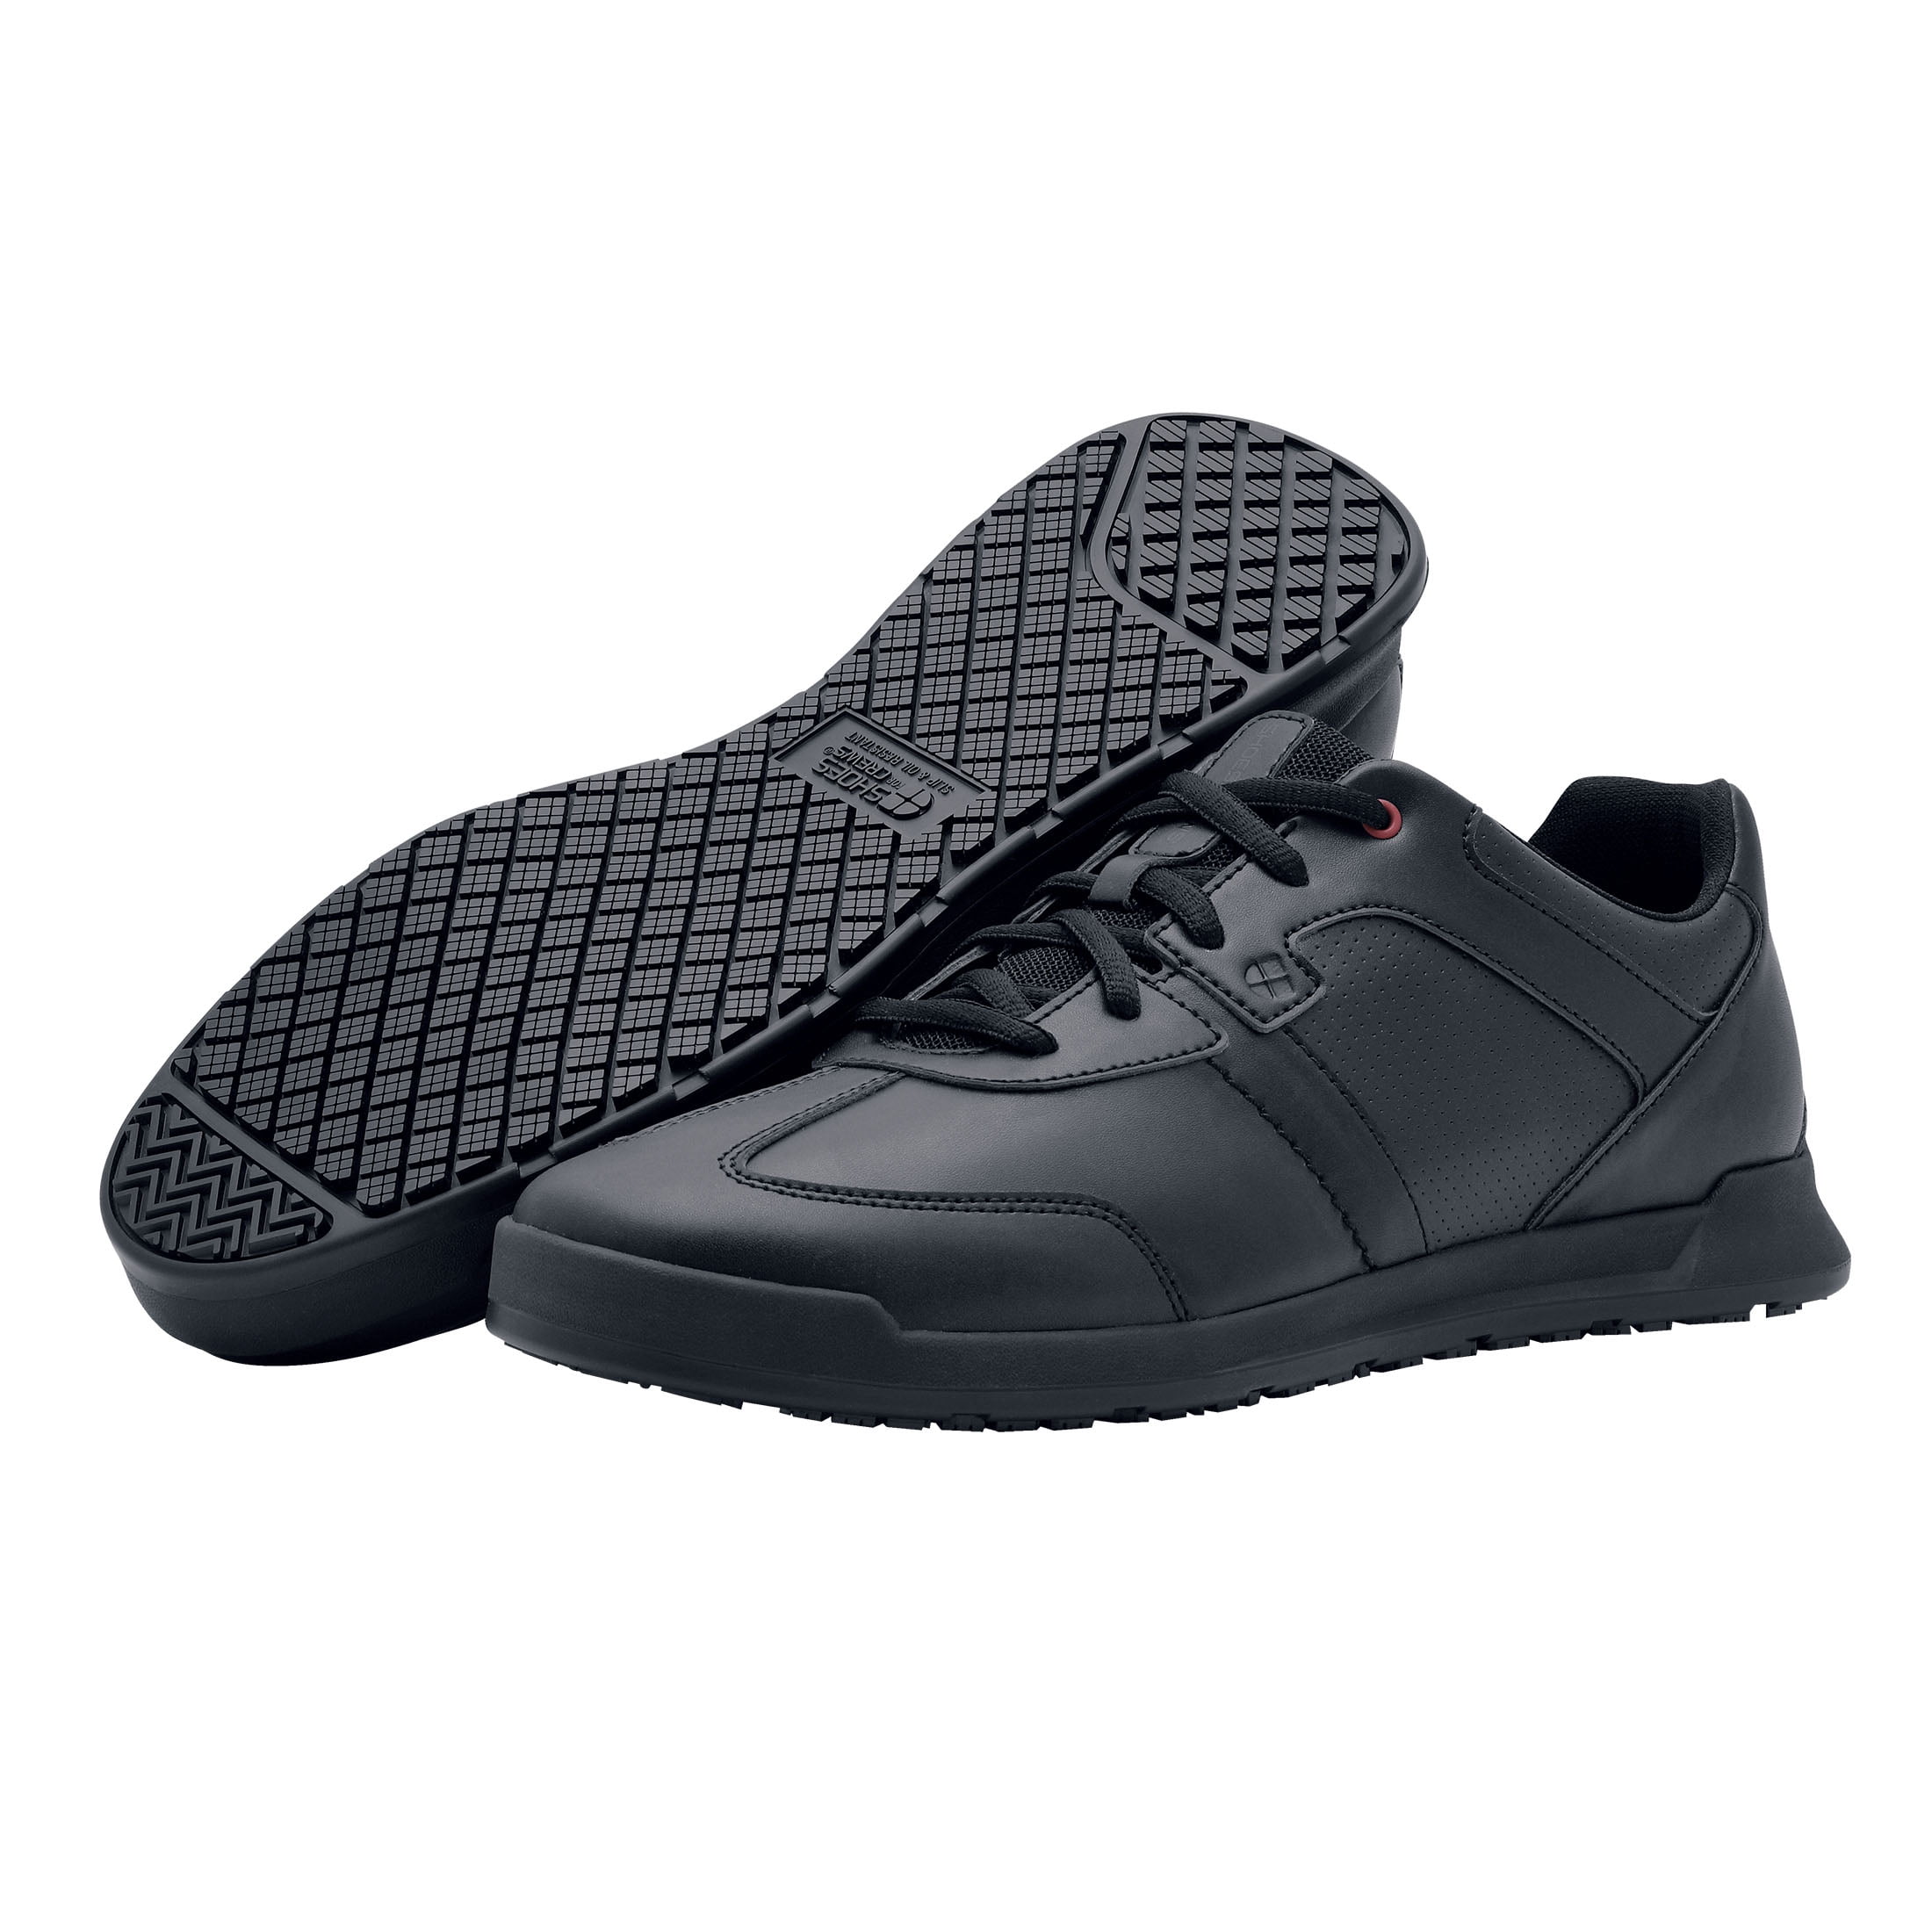 Shoes for Crews Freestyle II Men's Slip Resistant Work Shoes, Water Resistant, Black, Size Wide - Walmart.com